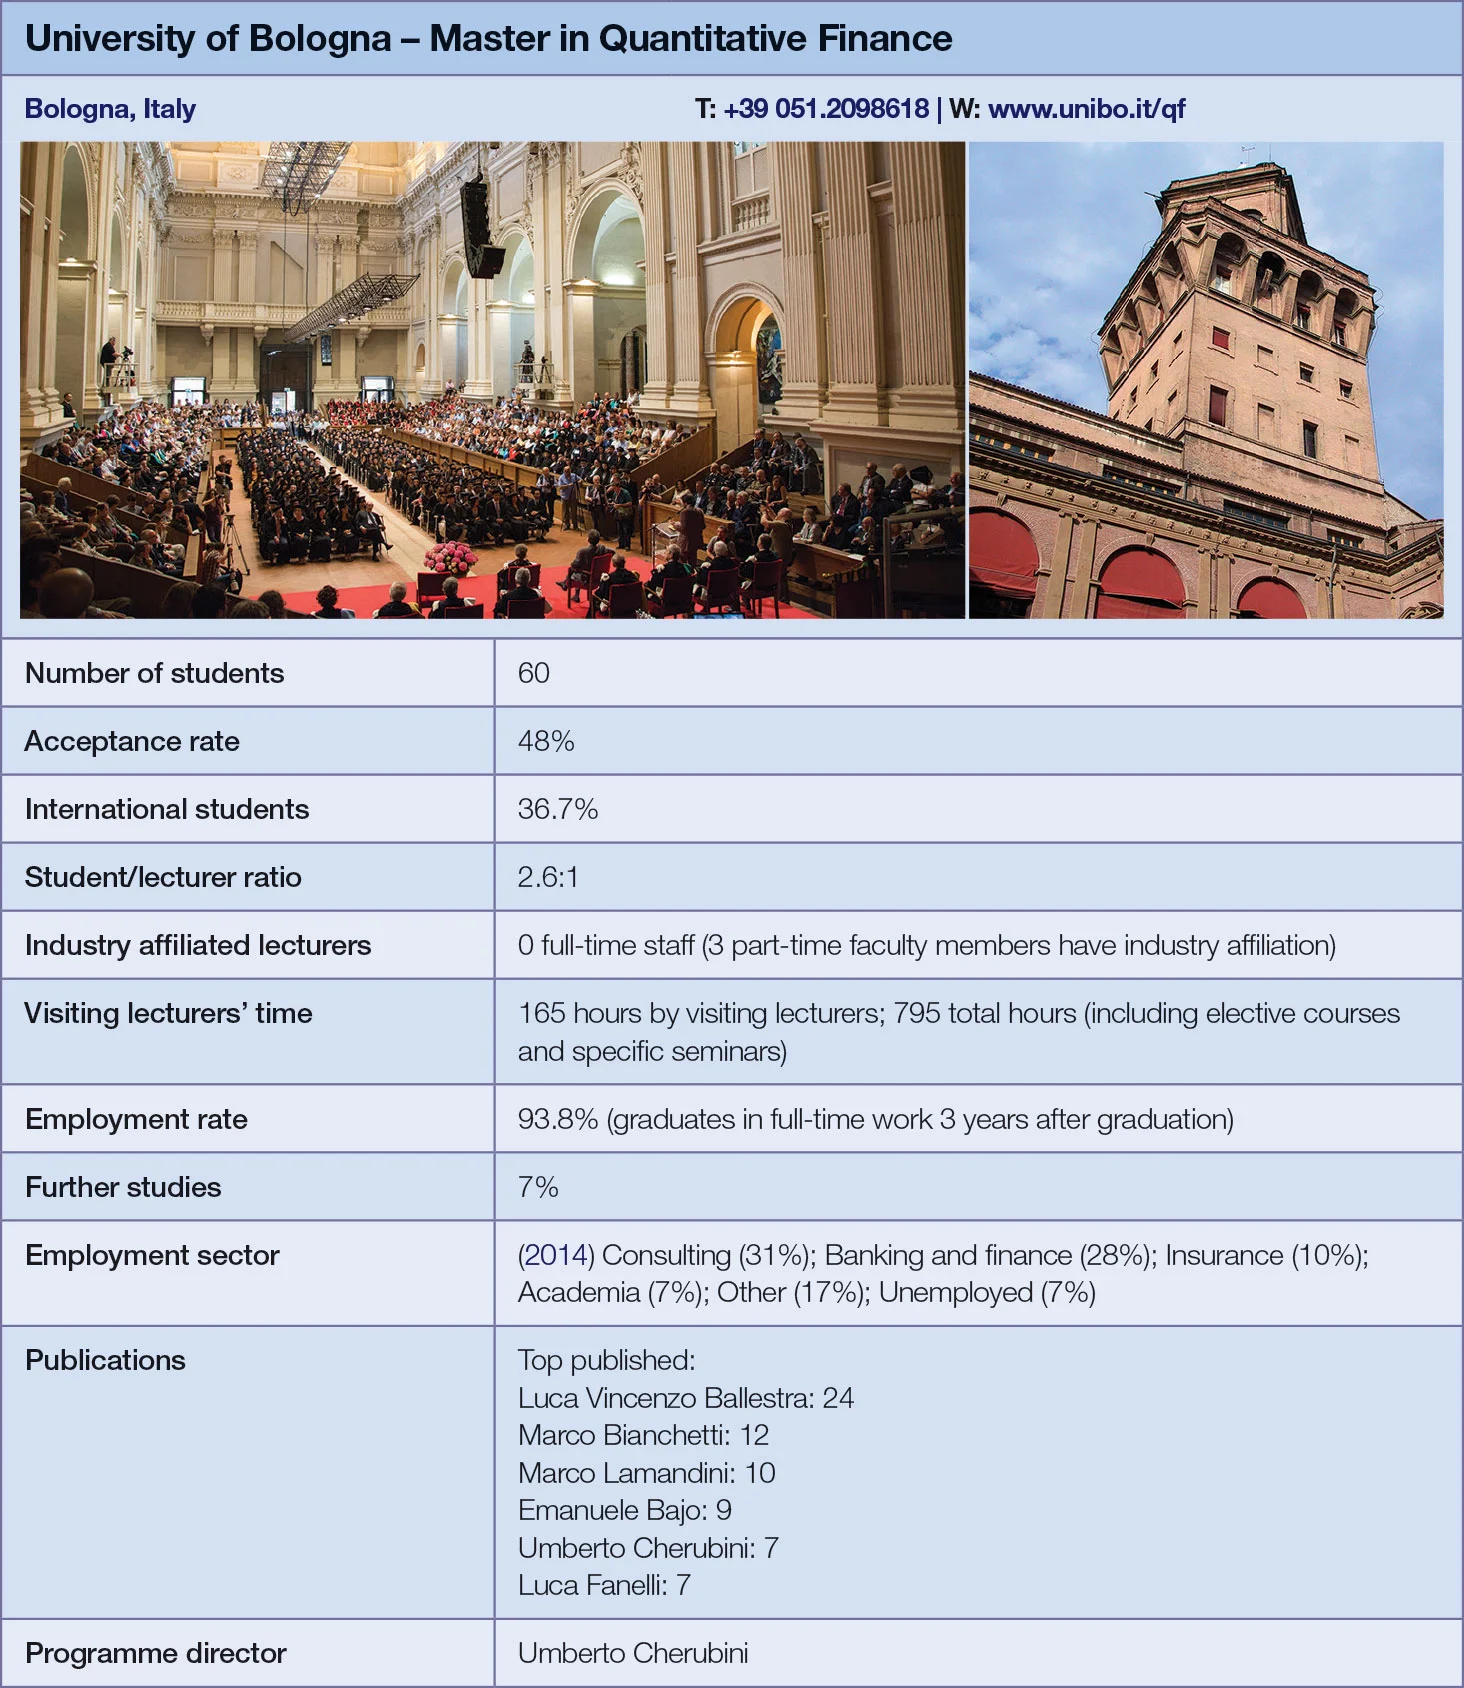 University of Bologna metrics